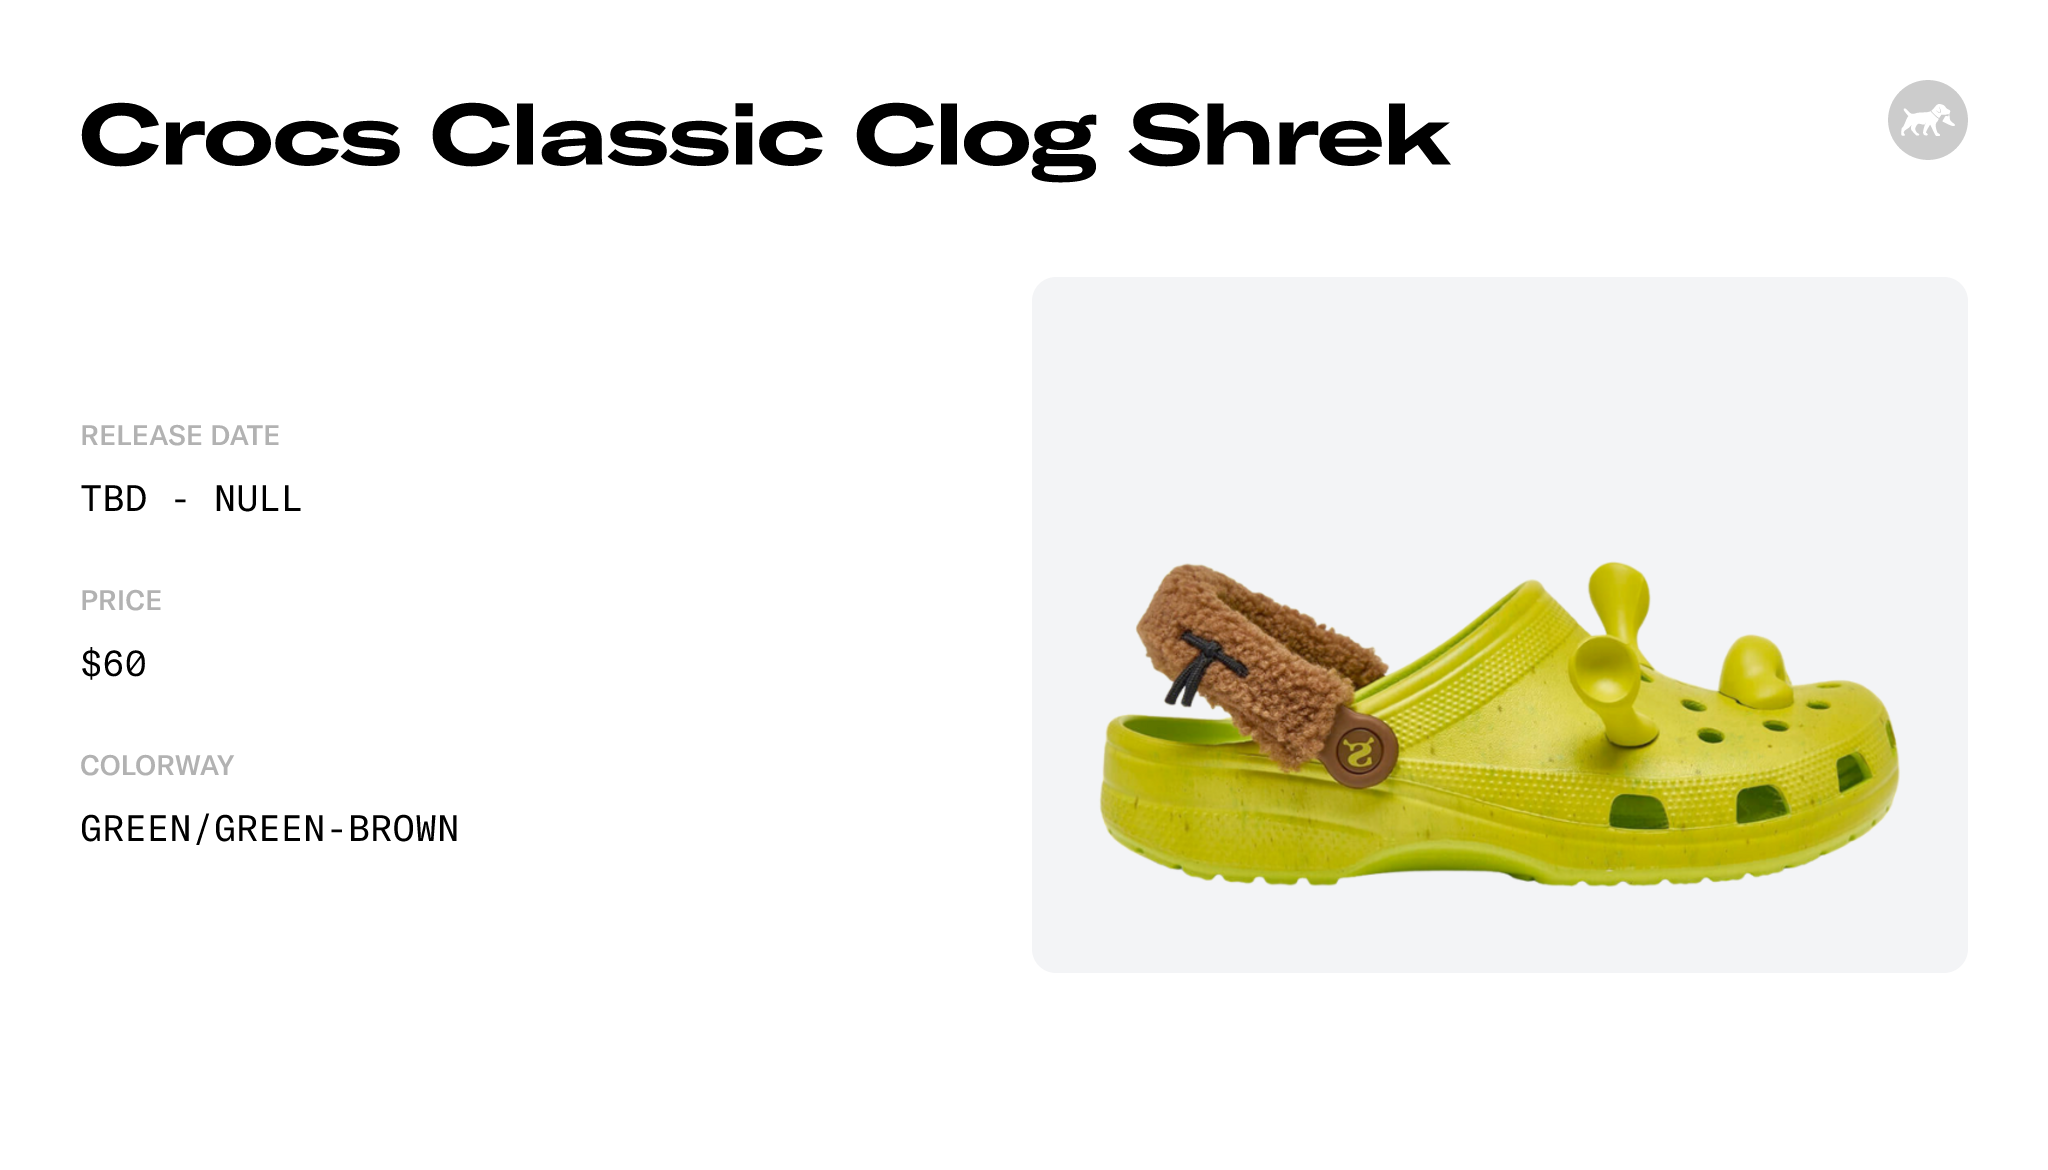 Contender for sneaker of the year, the Shrek Crocs Clog